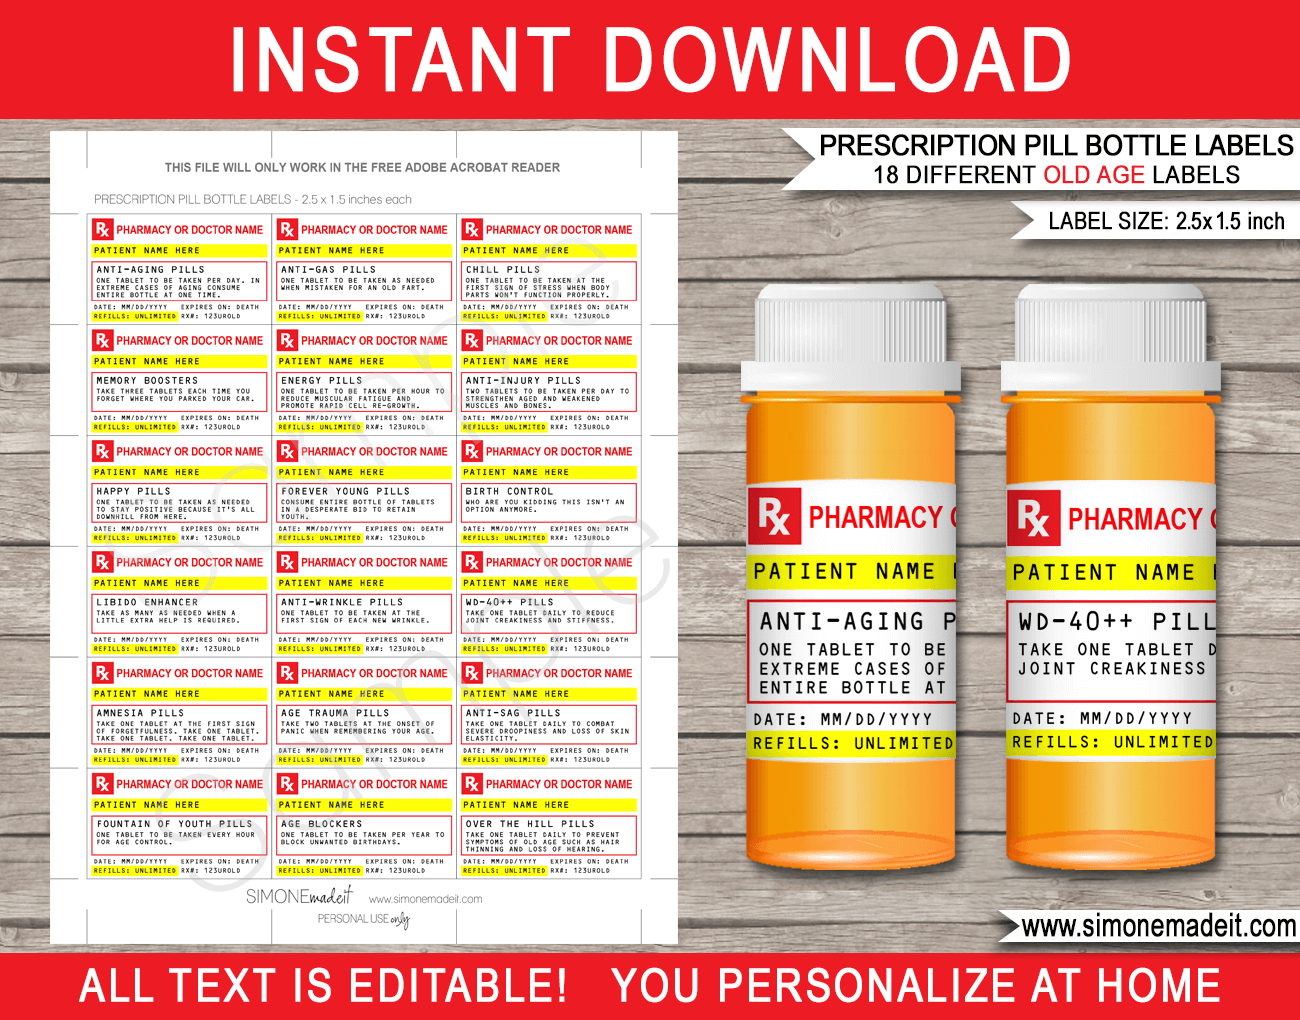 Old Age Prescription Labels (211.211 x 21.211 inch) - for Vials With Regard To Prescription Bottle Label Template